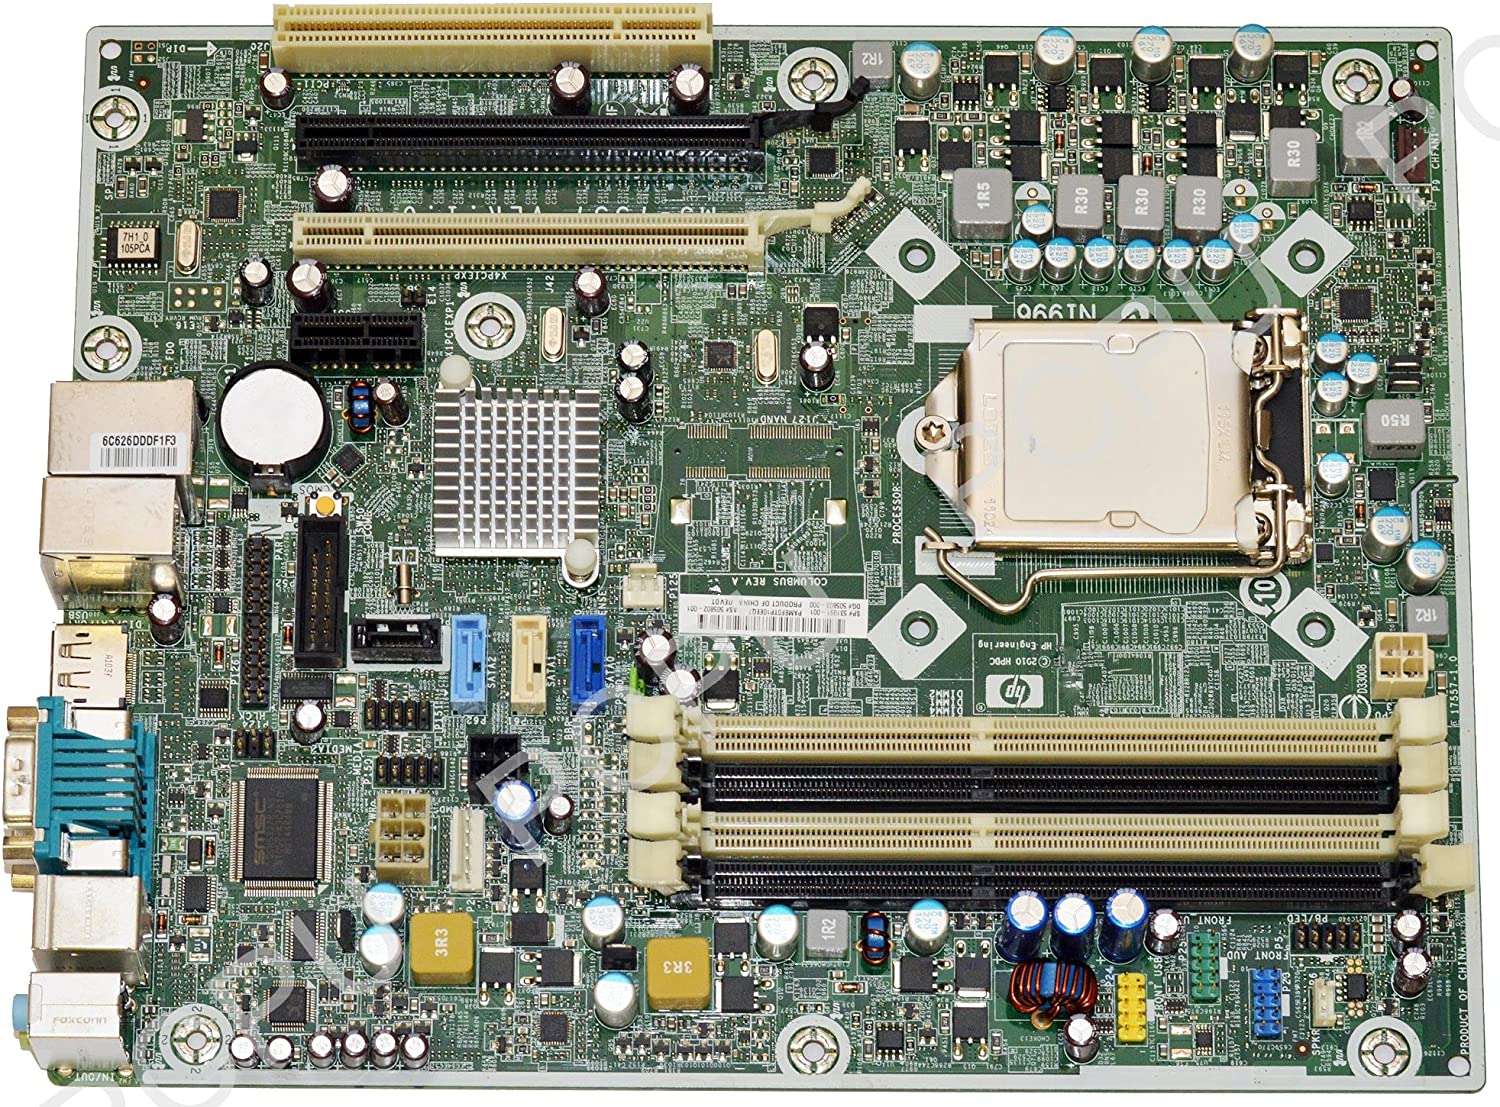 Motherboard 531991-001 for HP Compaq 8100 Elite SFF Intel Desktop s775